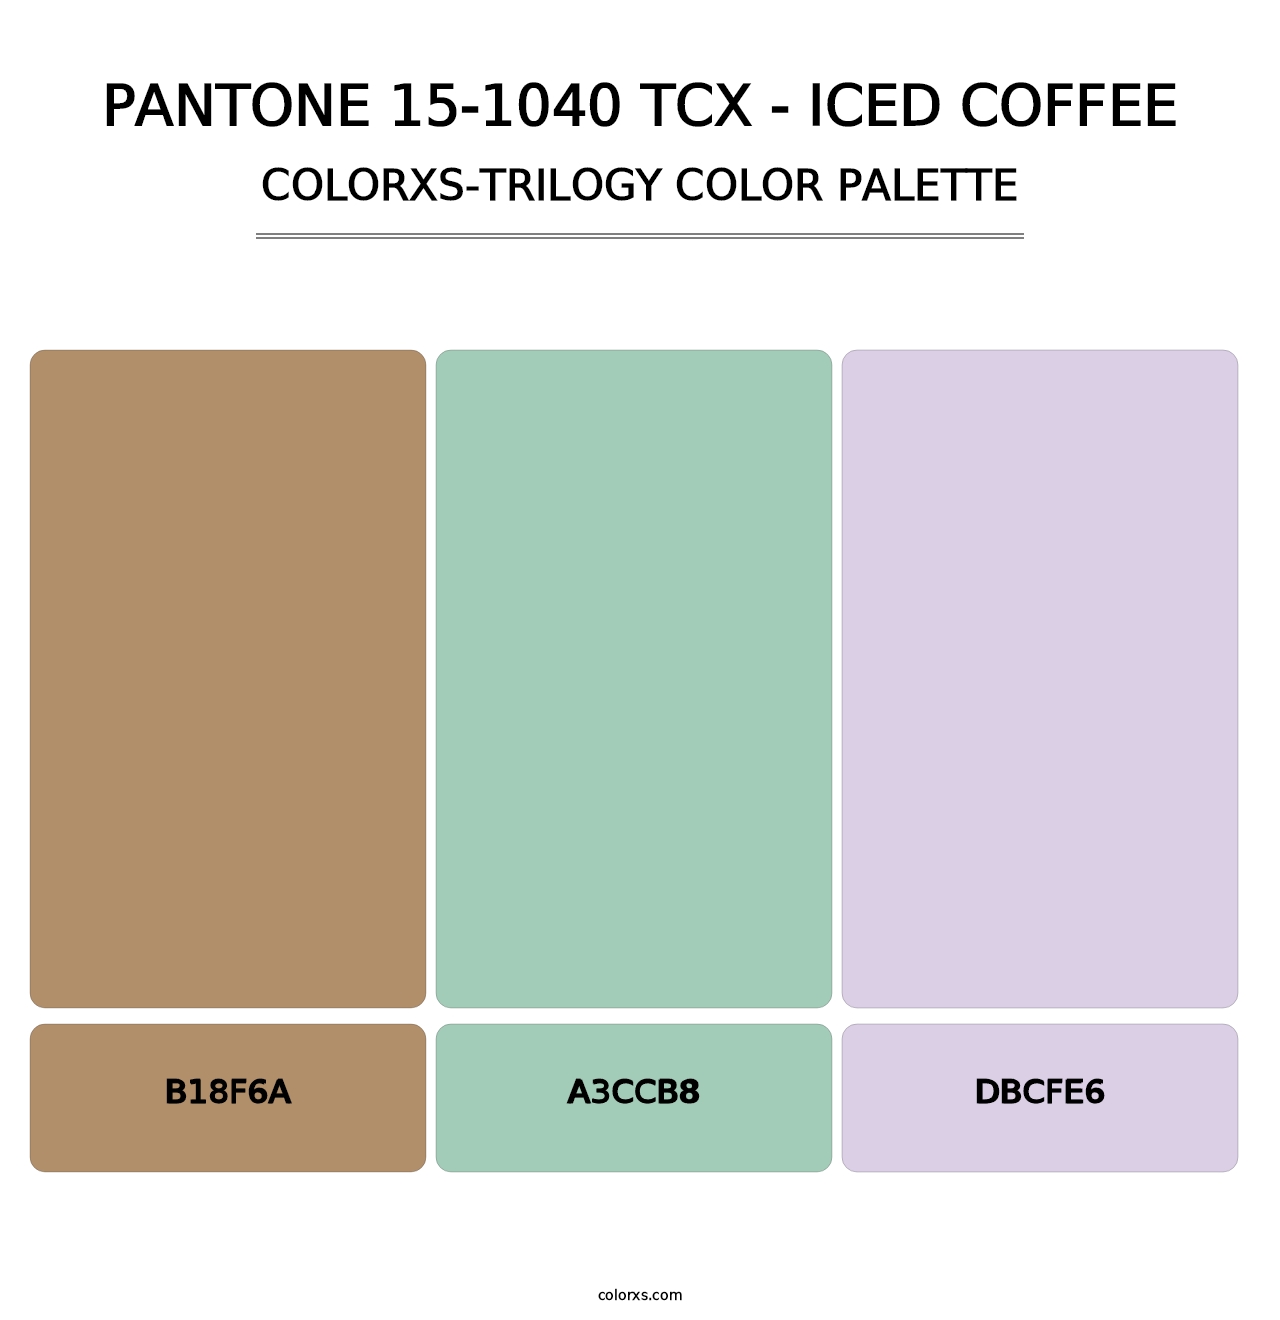 PANTONE 15-1040 TCX - Iced Coffee - Colorxs Trilogy Palette